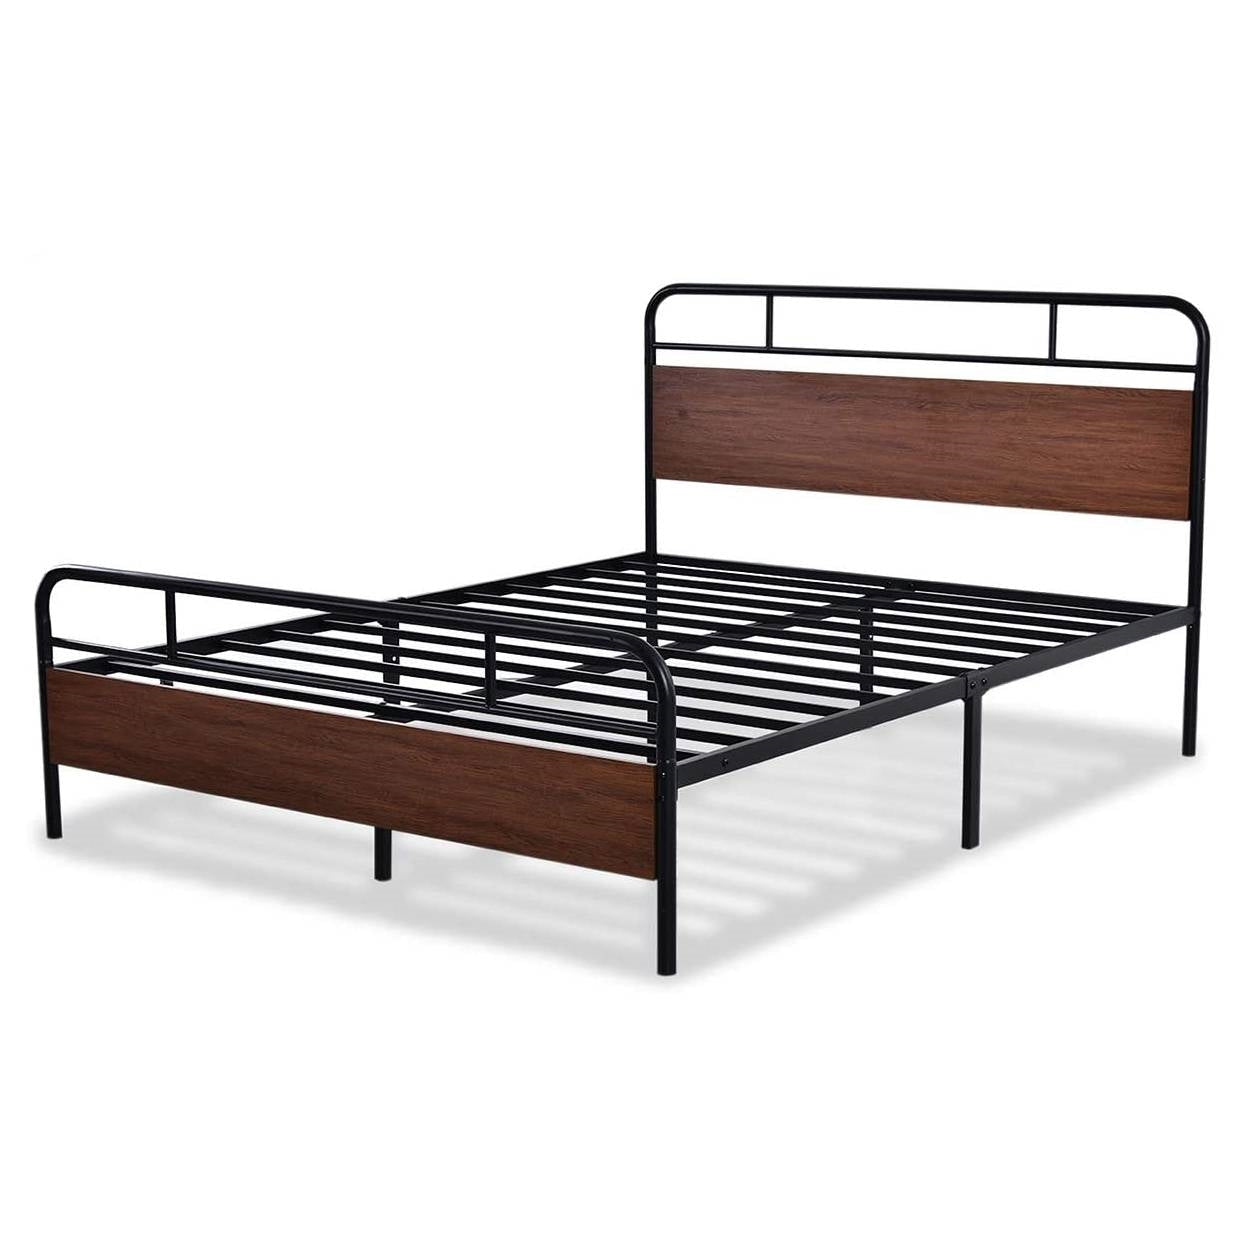 Bedroom > Bed Frames > Platform Beds - Queen Size Industrial Metal Wood Platform Bed Frame With Headboard And Footboard